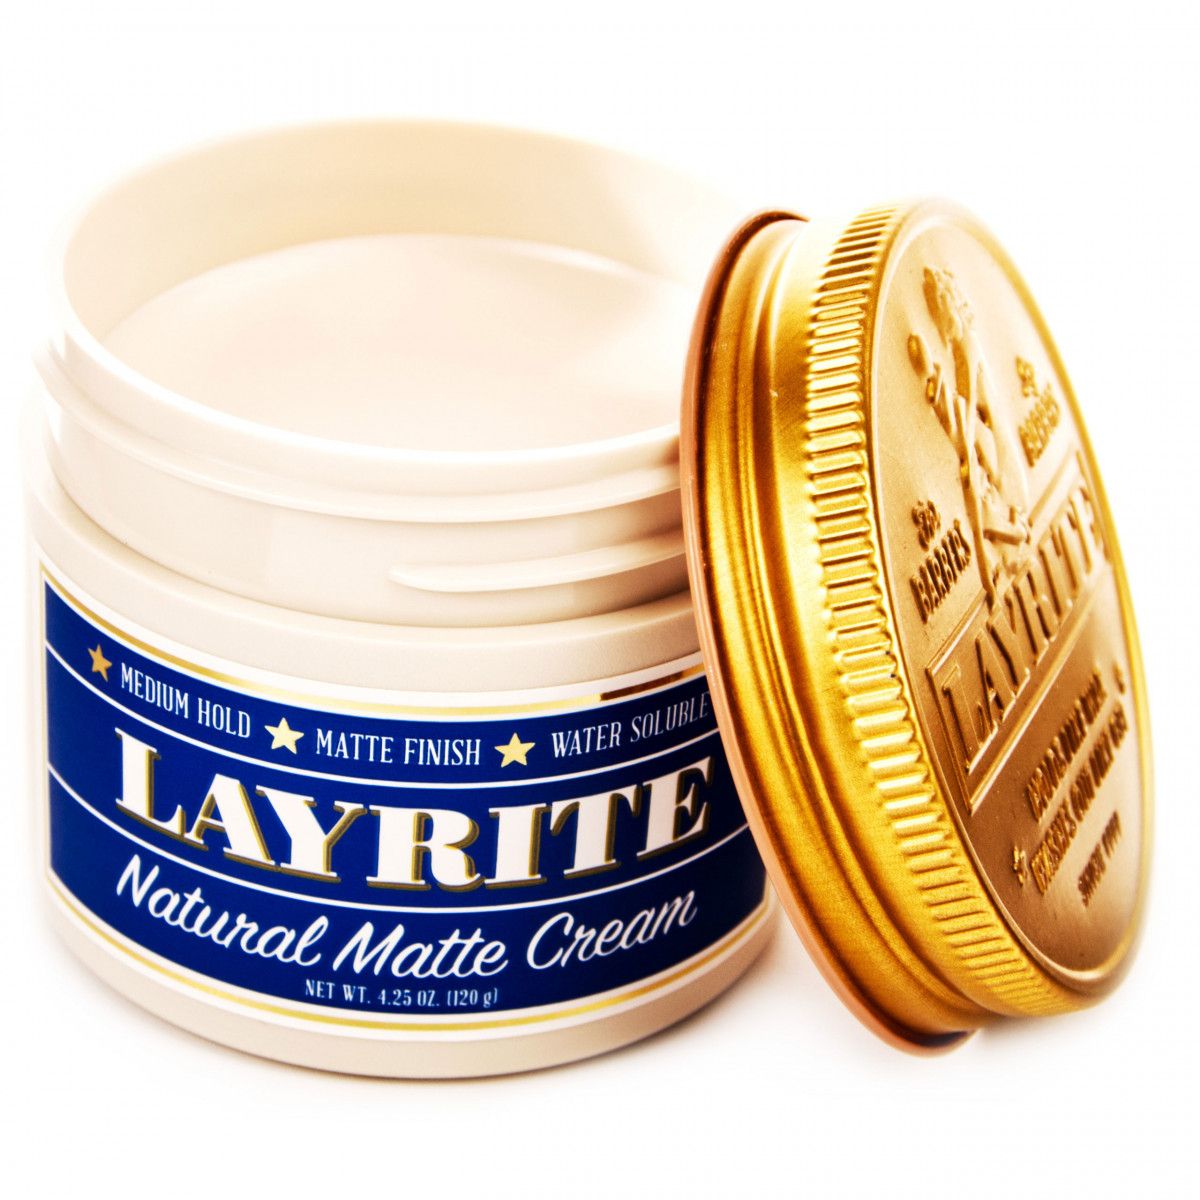 Layrite Natural Matt Cream Pomade matowa pomada do włosów 120g Layrite - 1